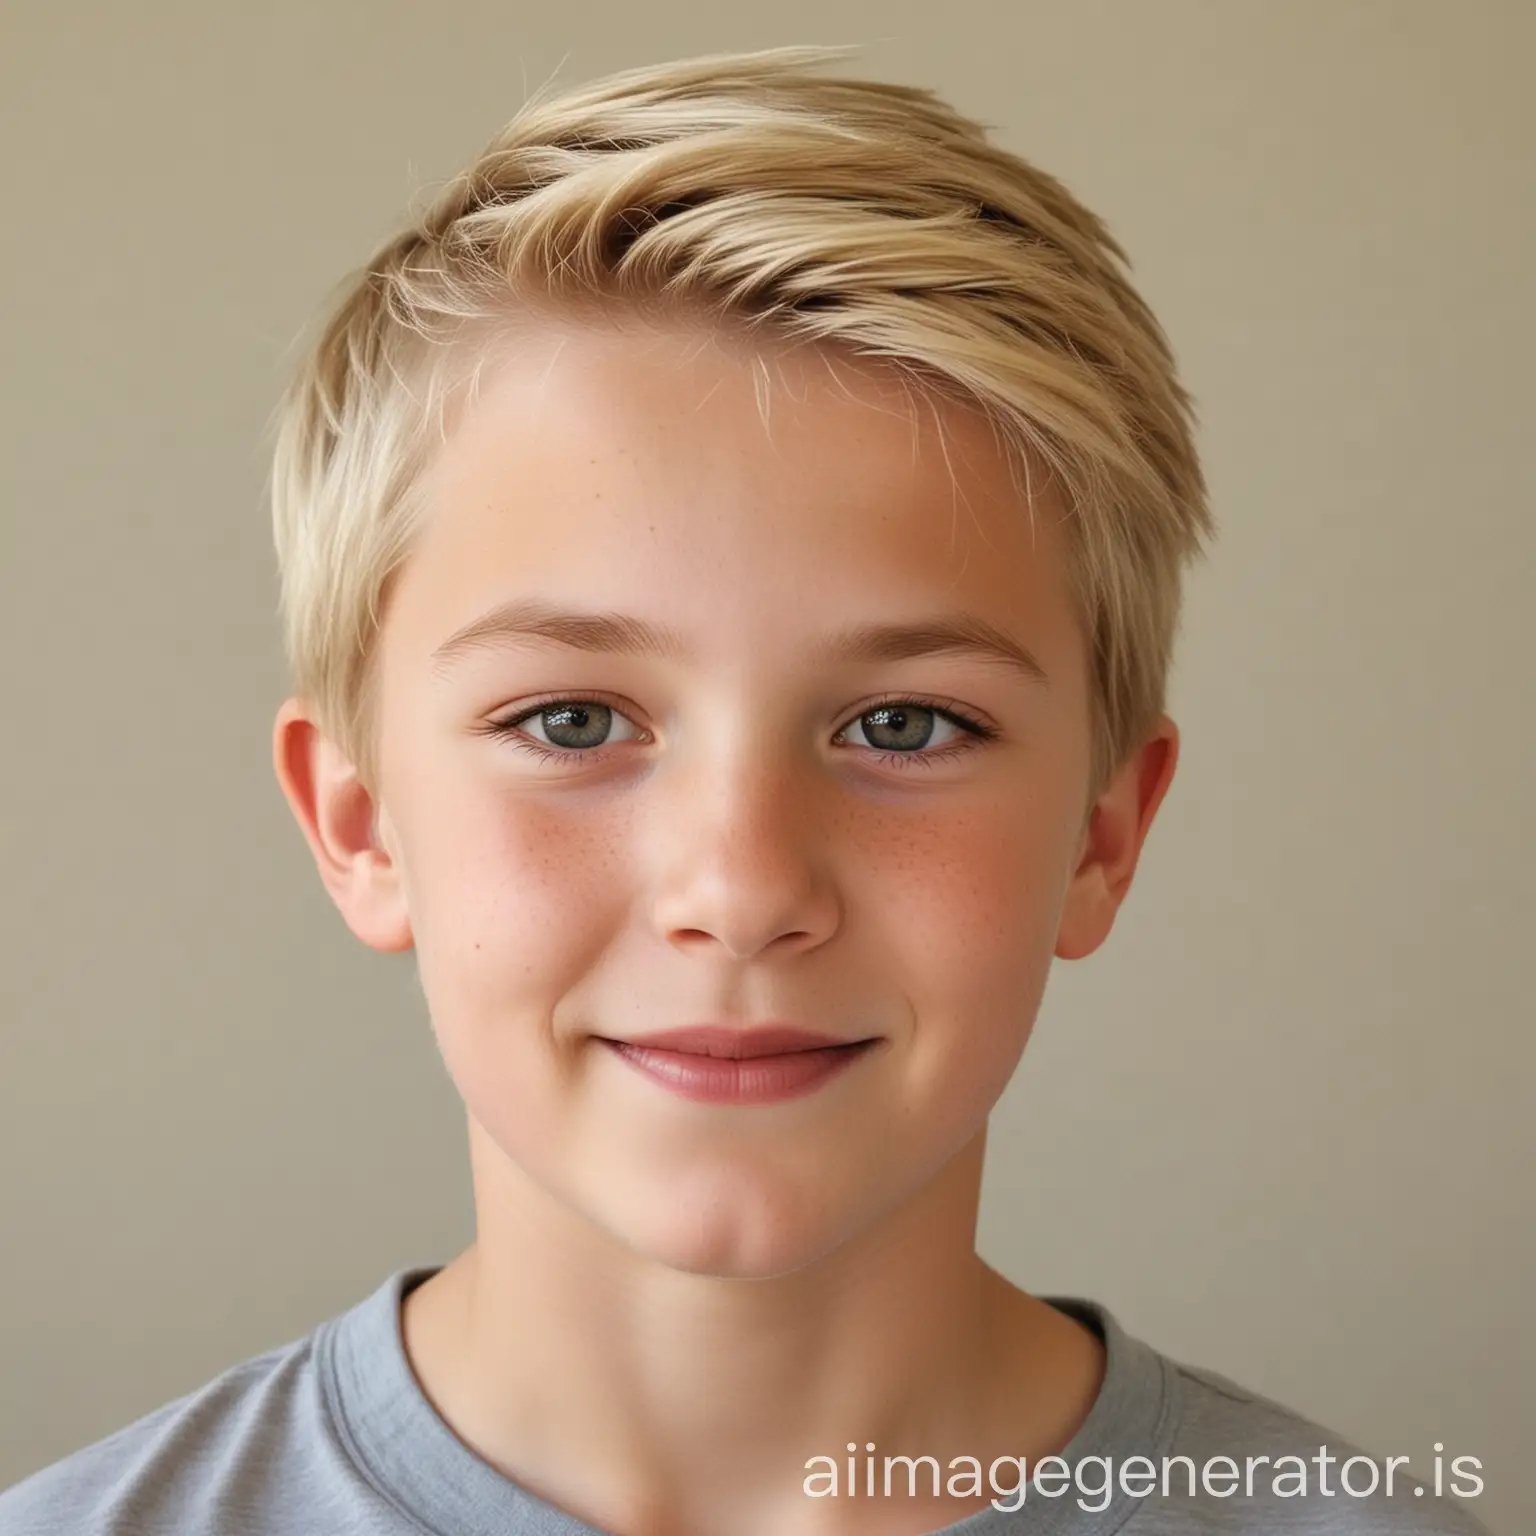 Blonde-Haired-10YearOld-Boy-with-Fair-Skin-Portrait